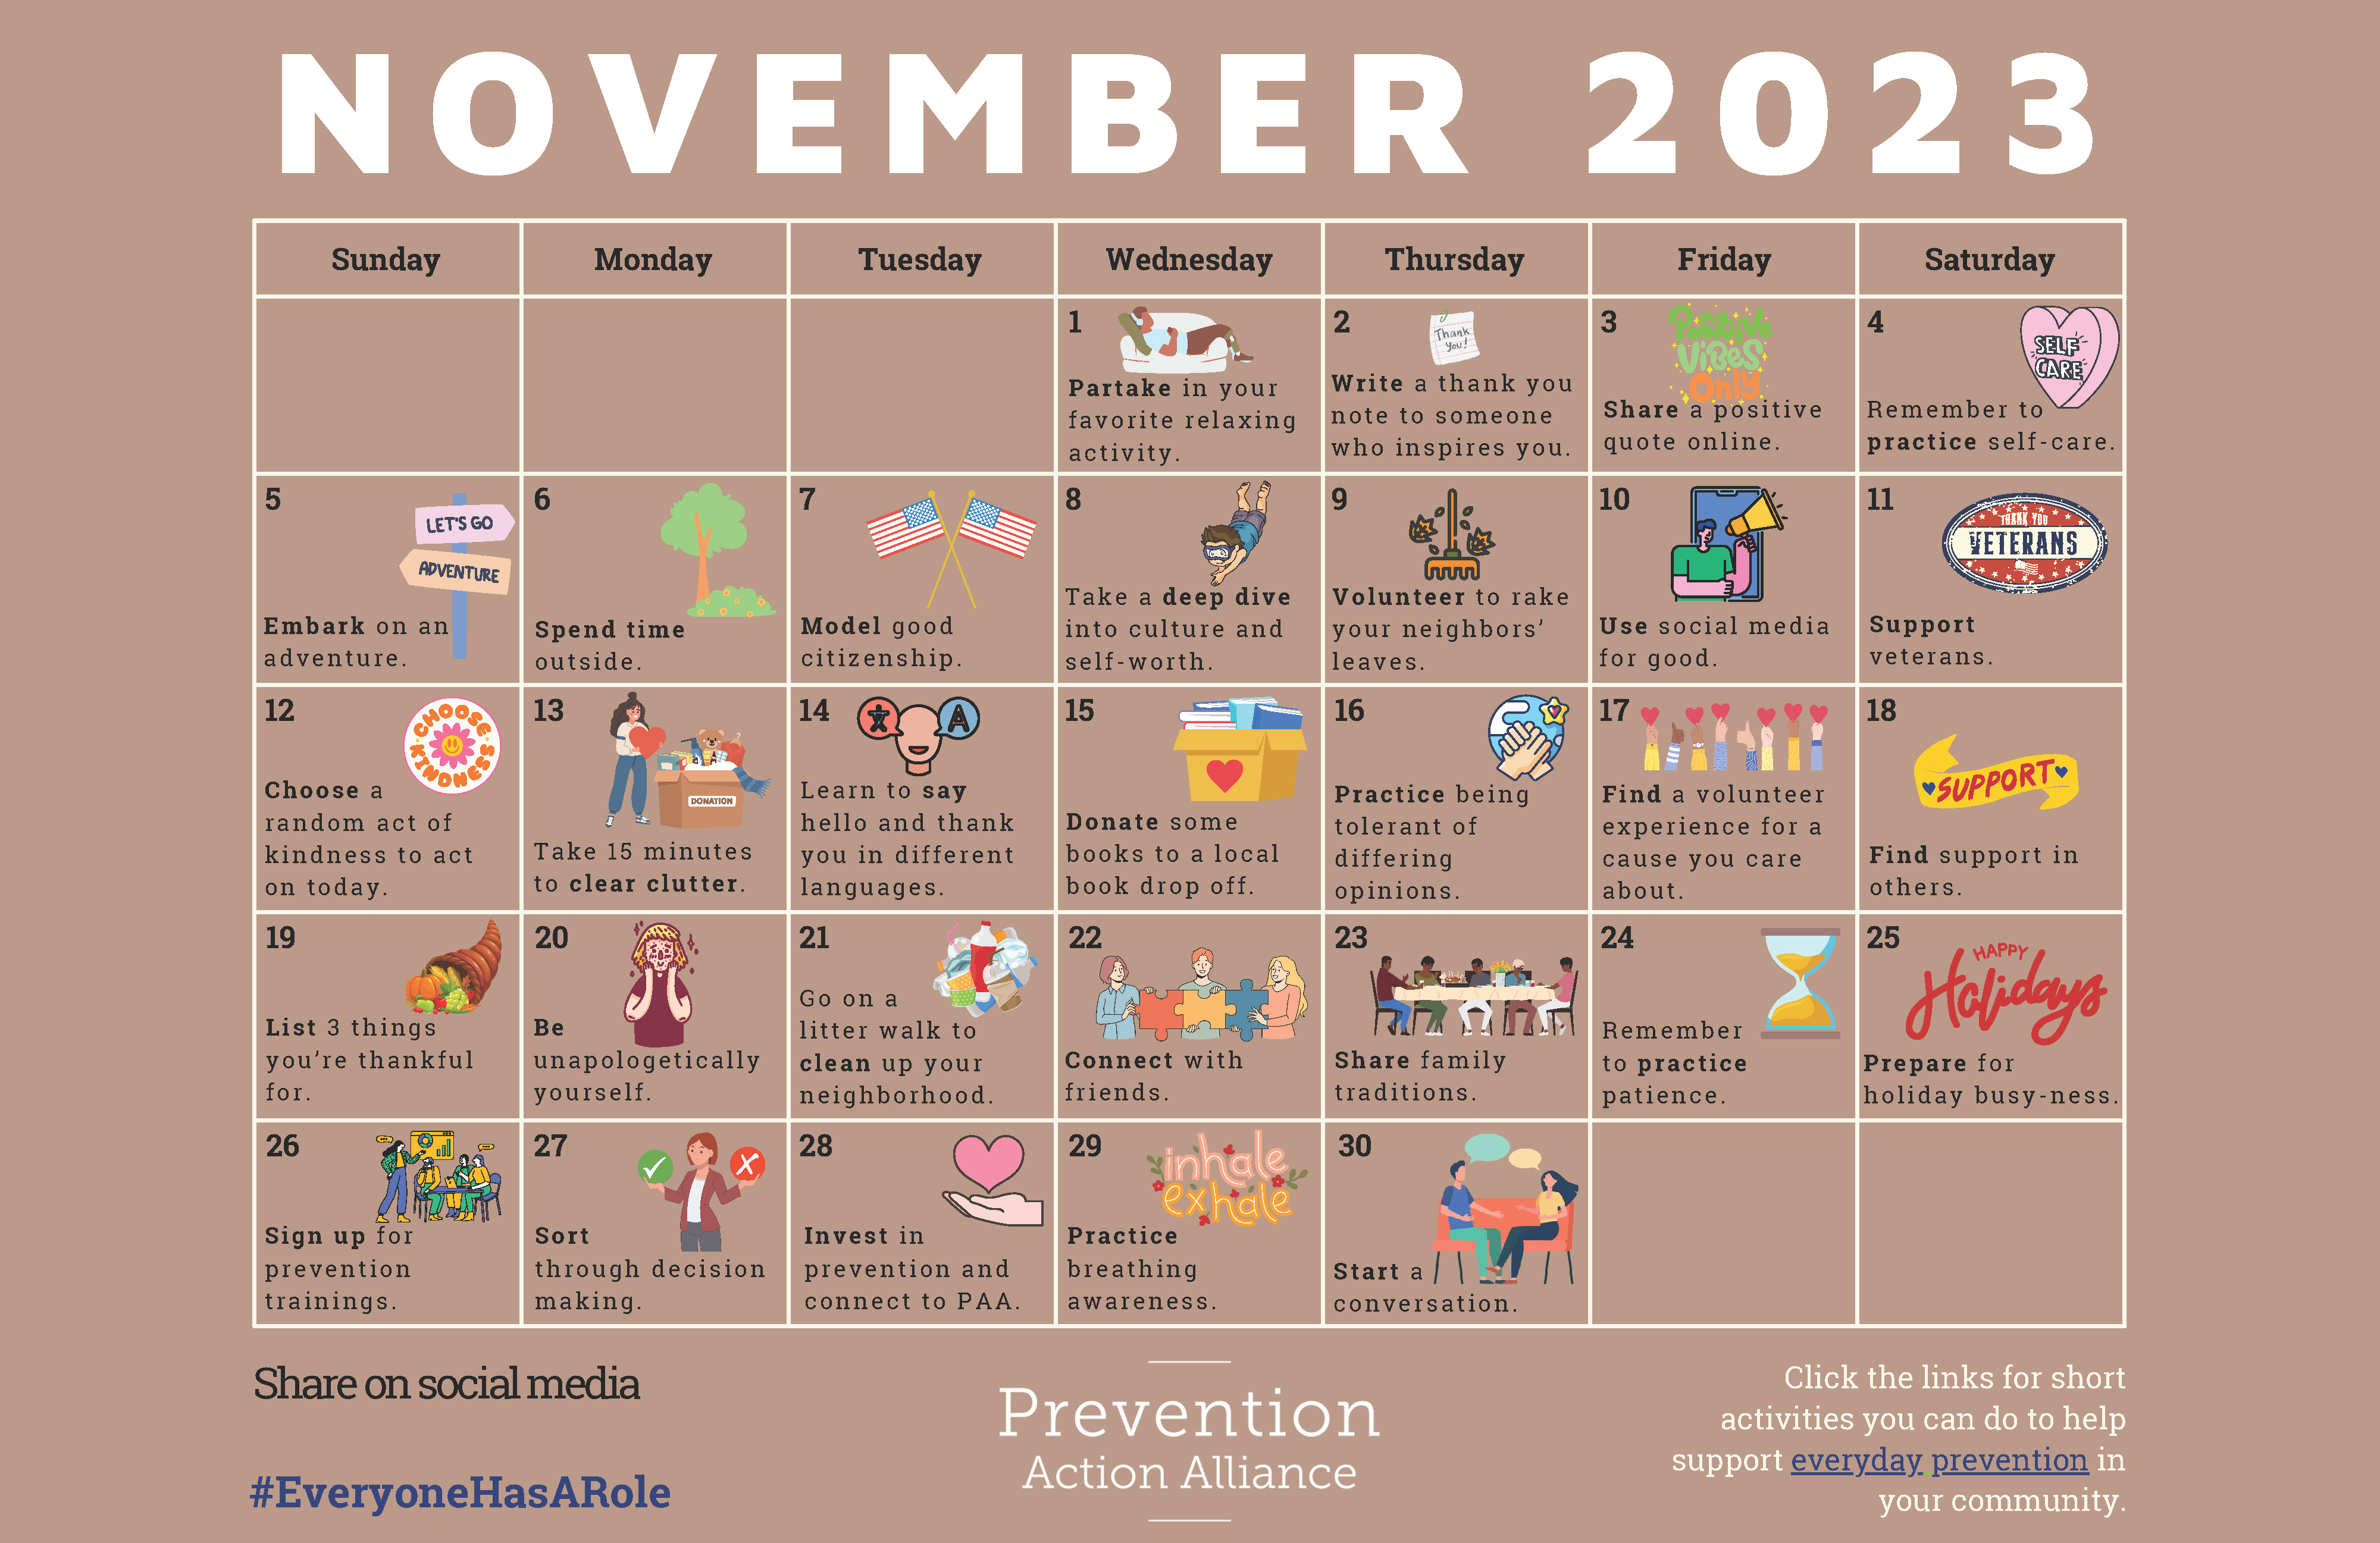 November 2023 Prevention Calendar